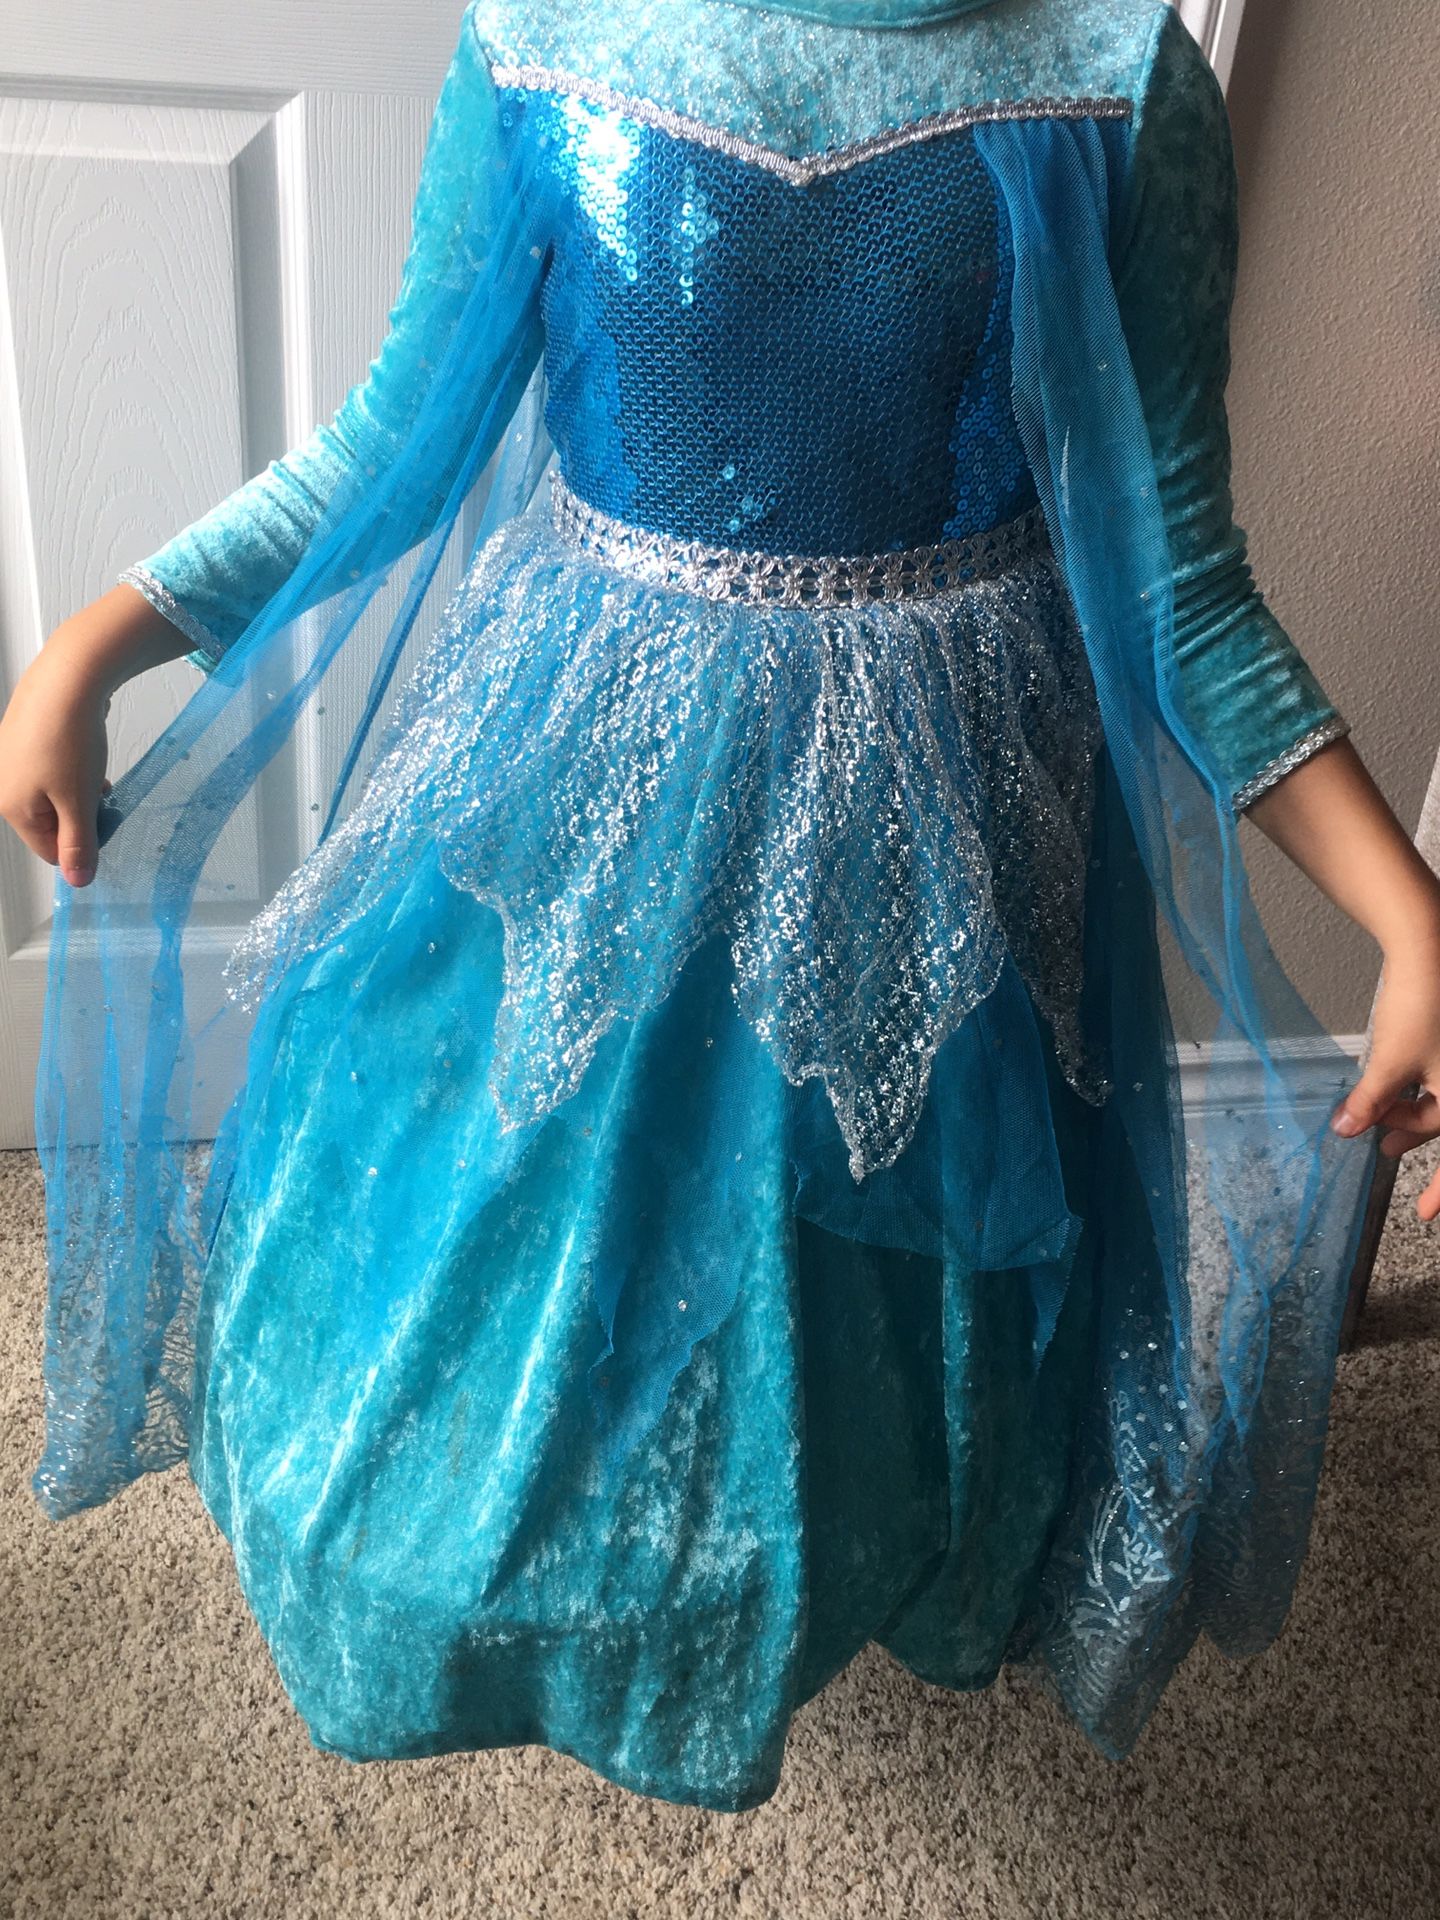 Costume Dress Up Disney Frozen Elsa